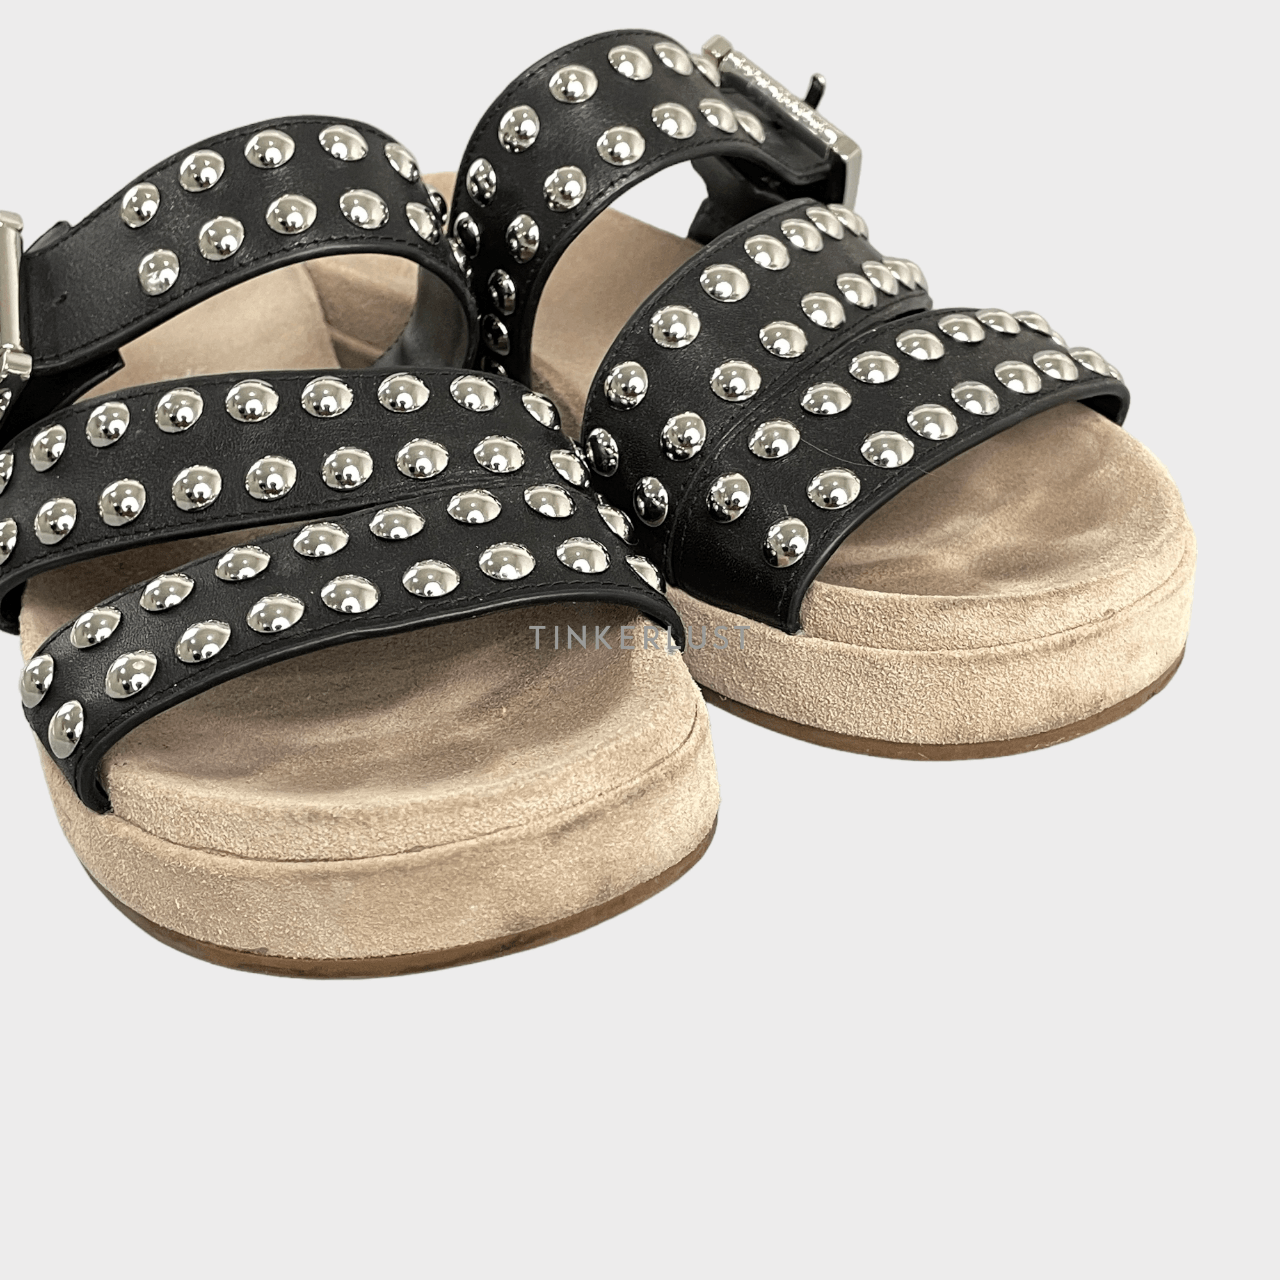 Michael Kors Black & Grey Ansel Studded Leather Slide Sandal